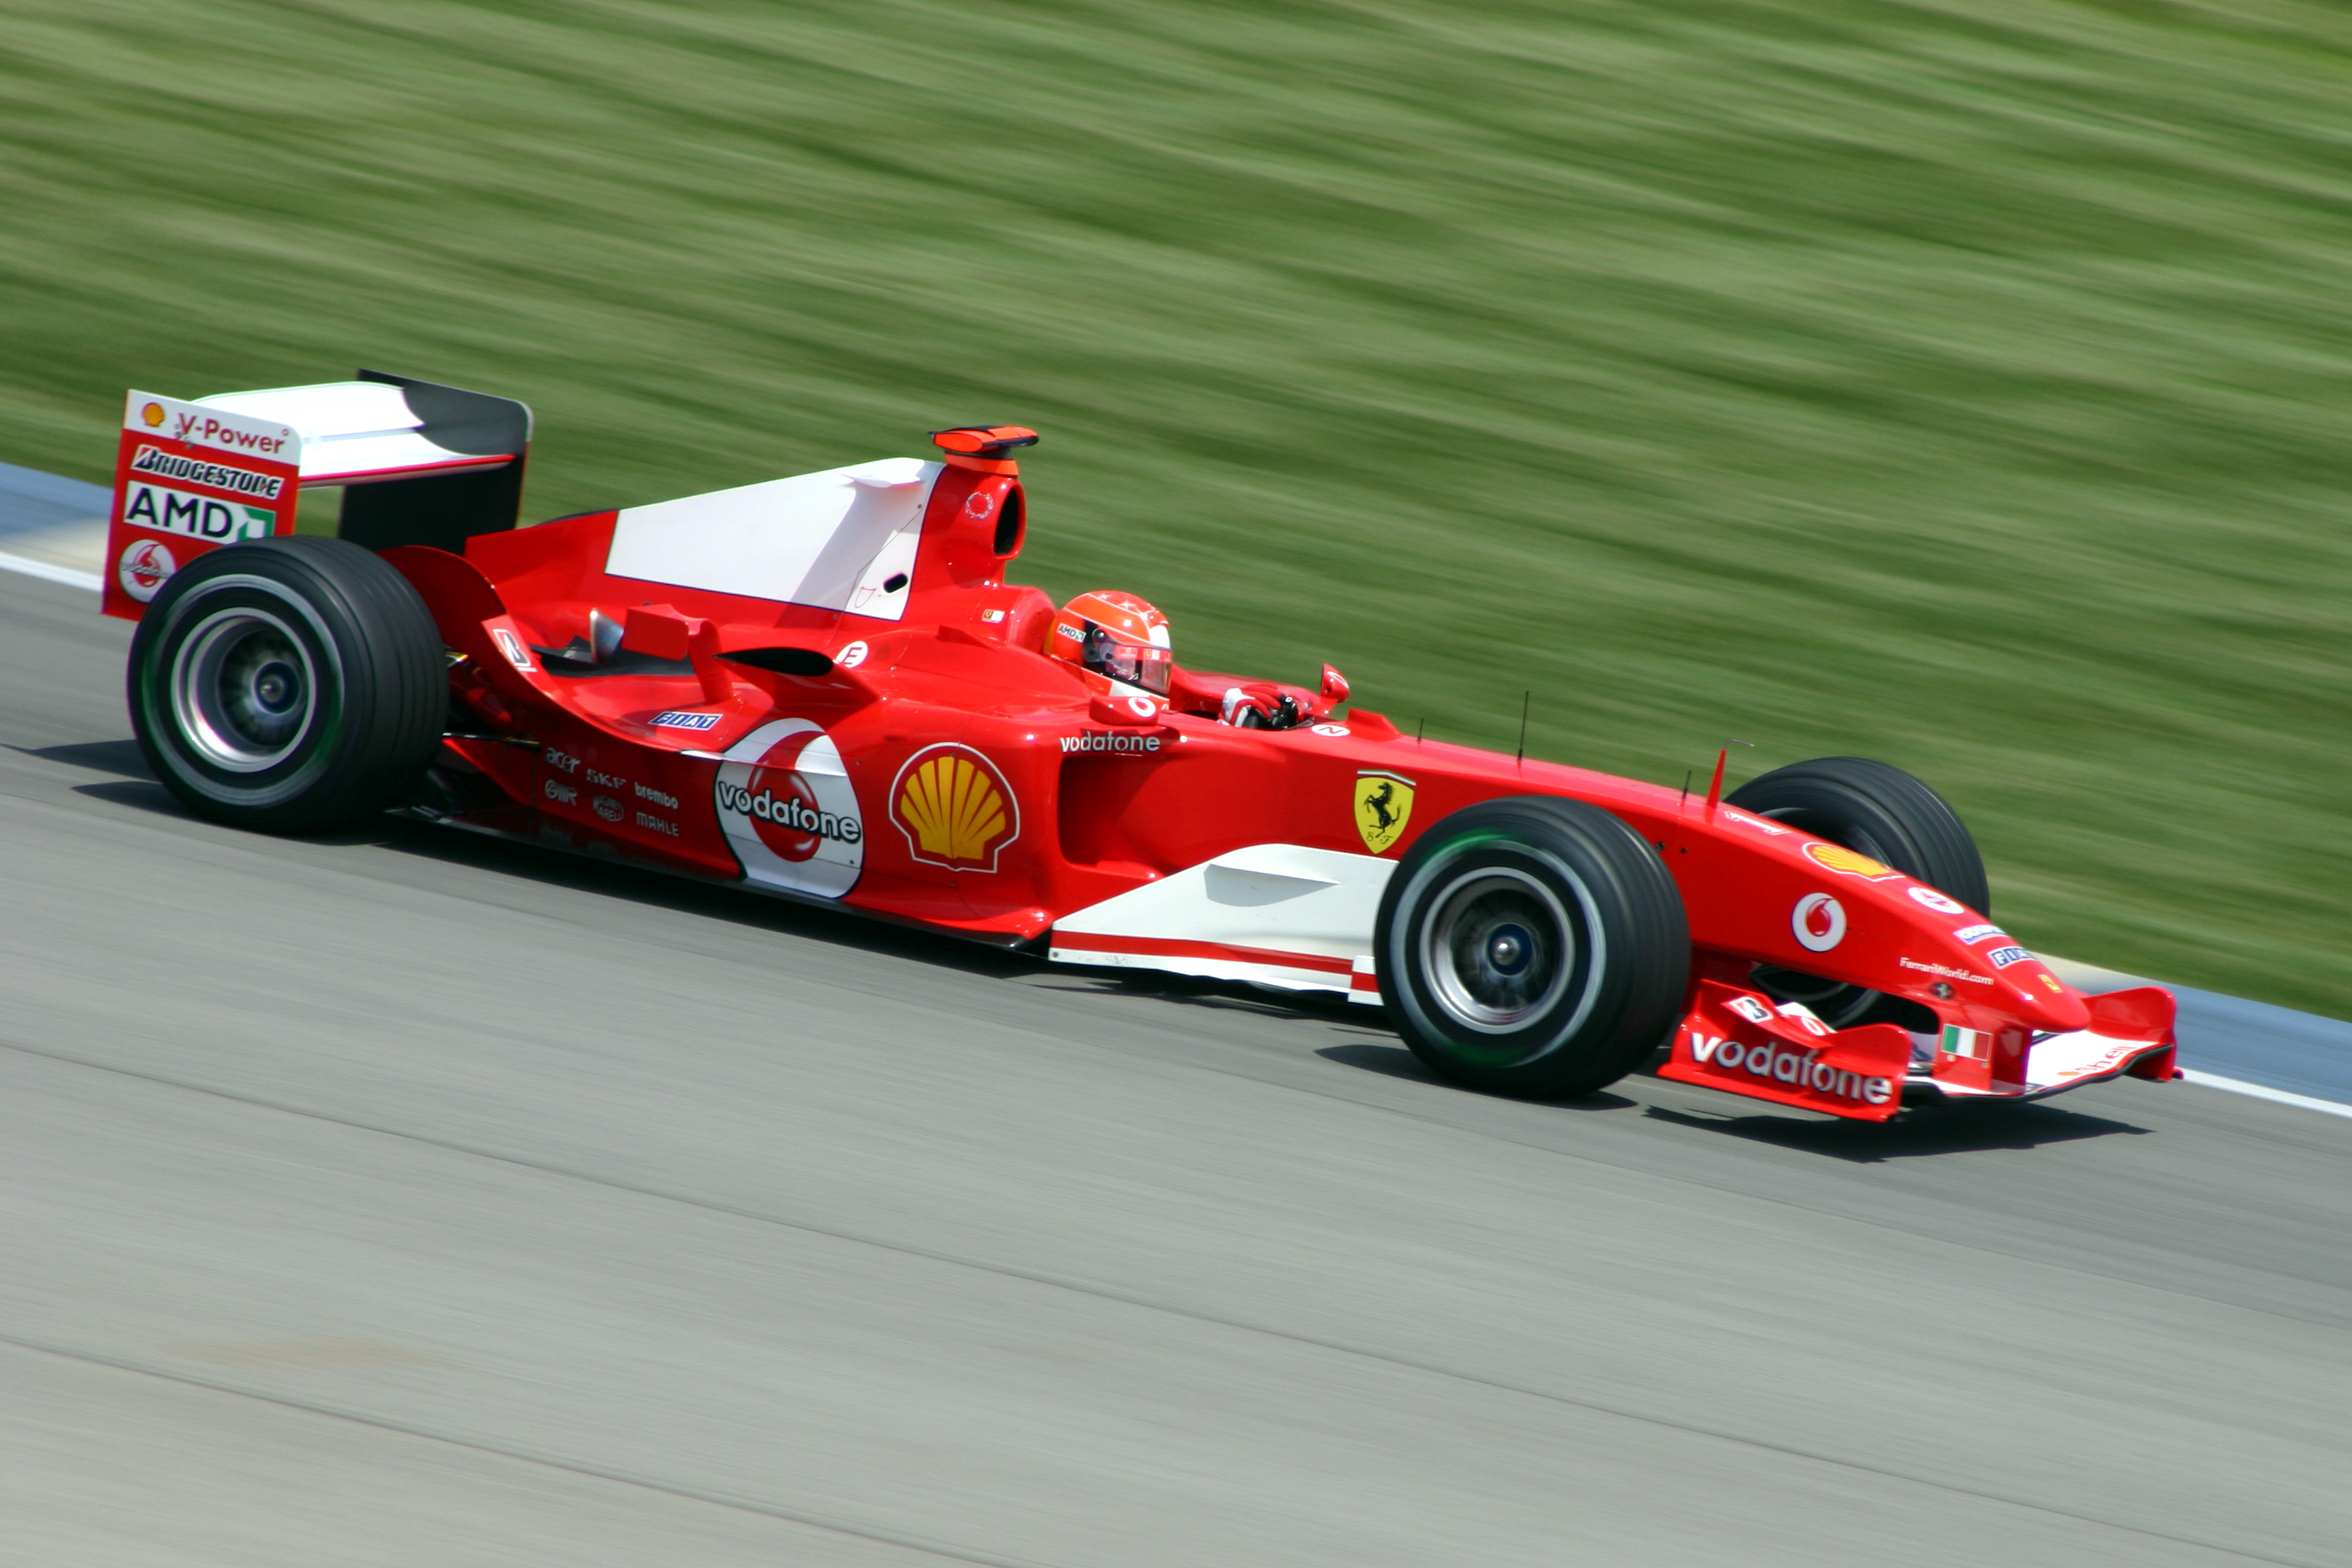 File:Michael Schumacher Ferrari 2004.jpg